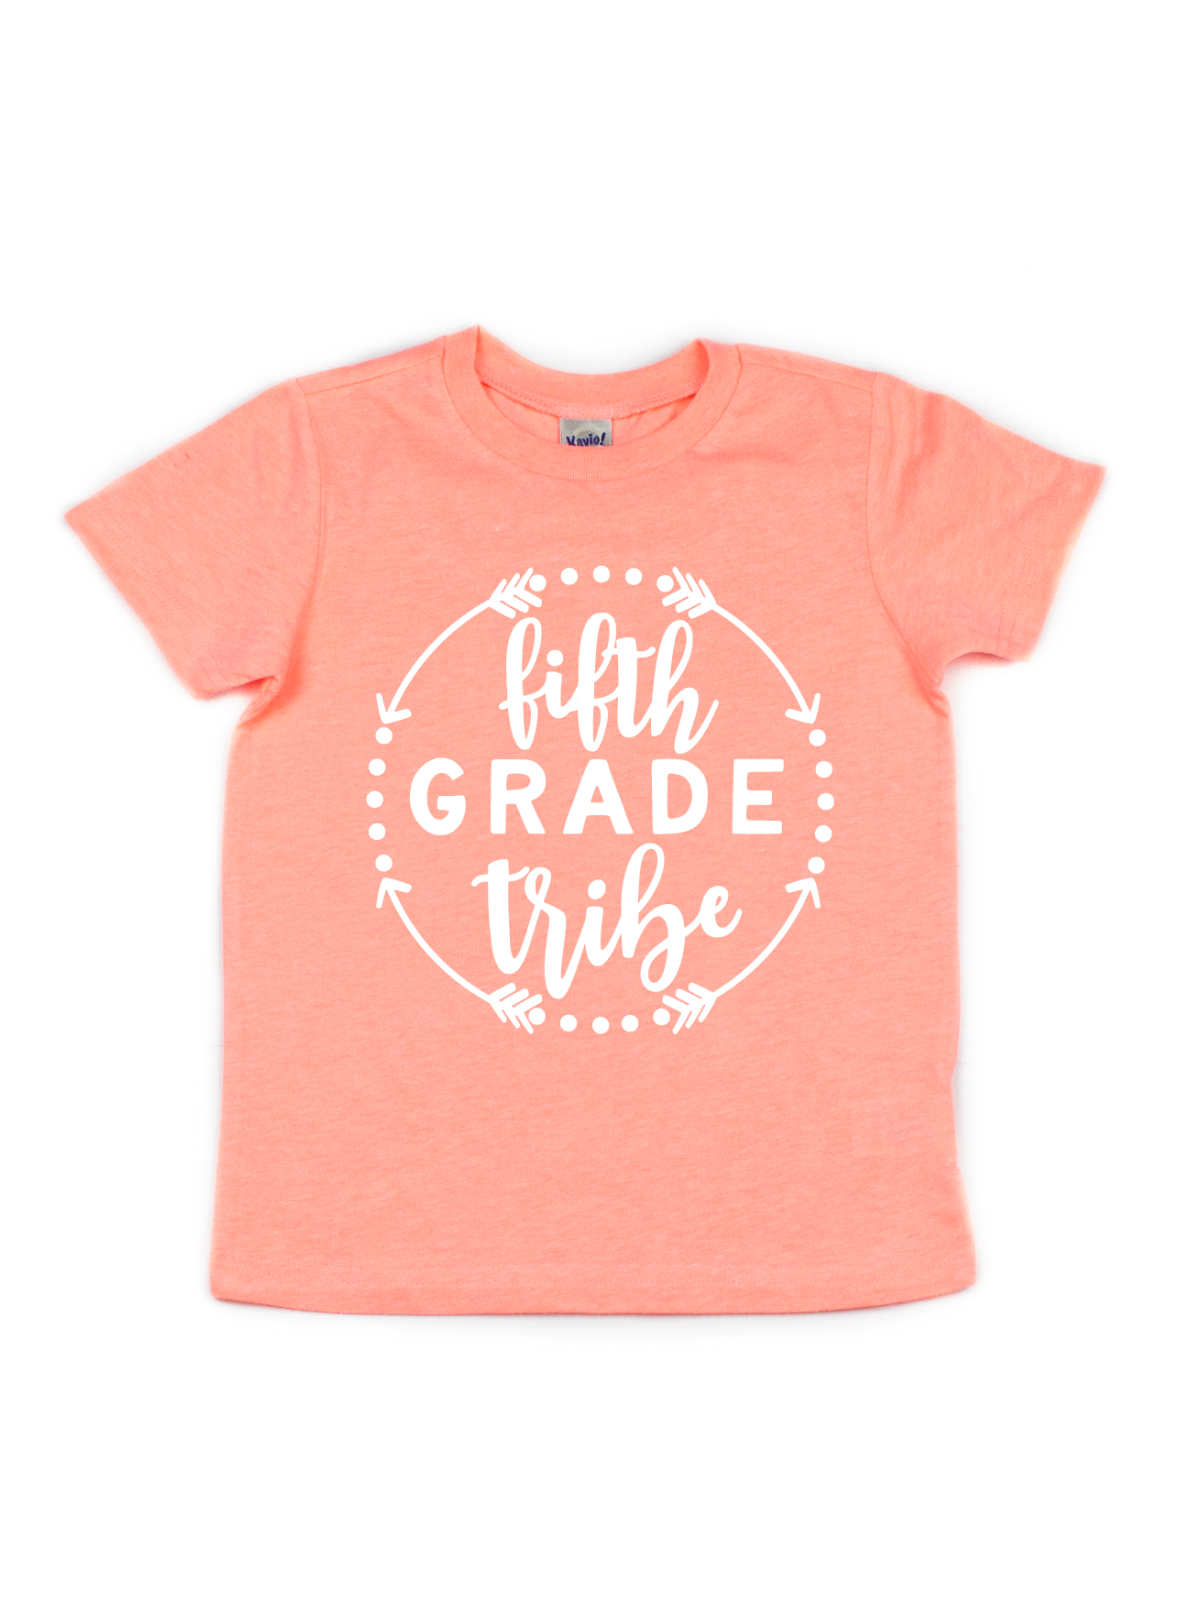 fifth grade tribe kids school shirt